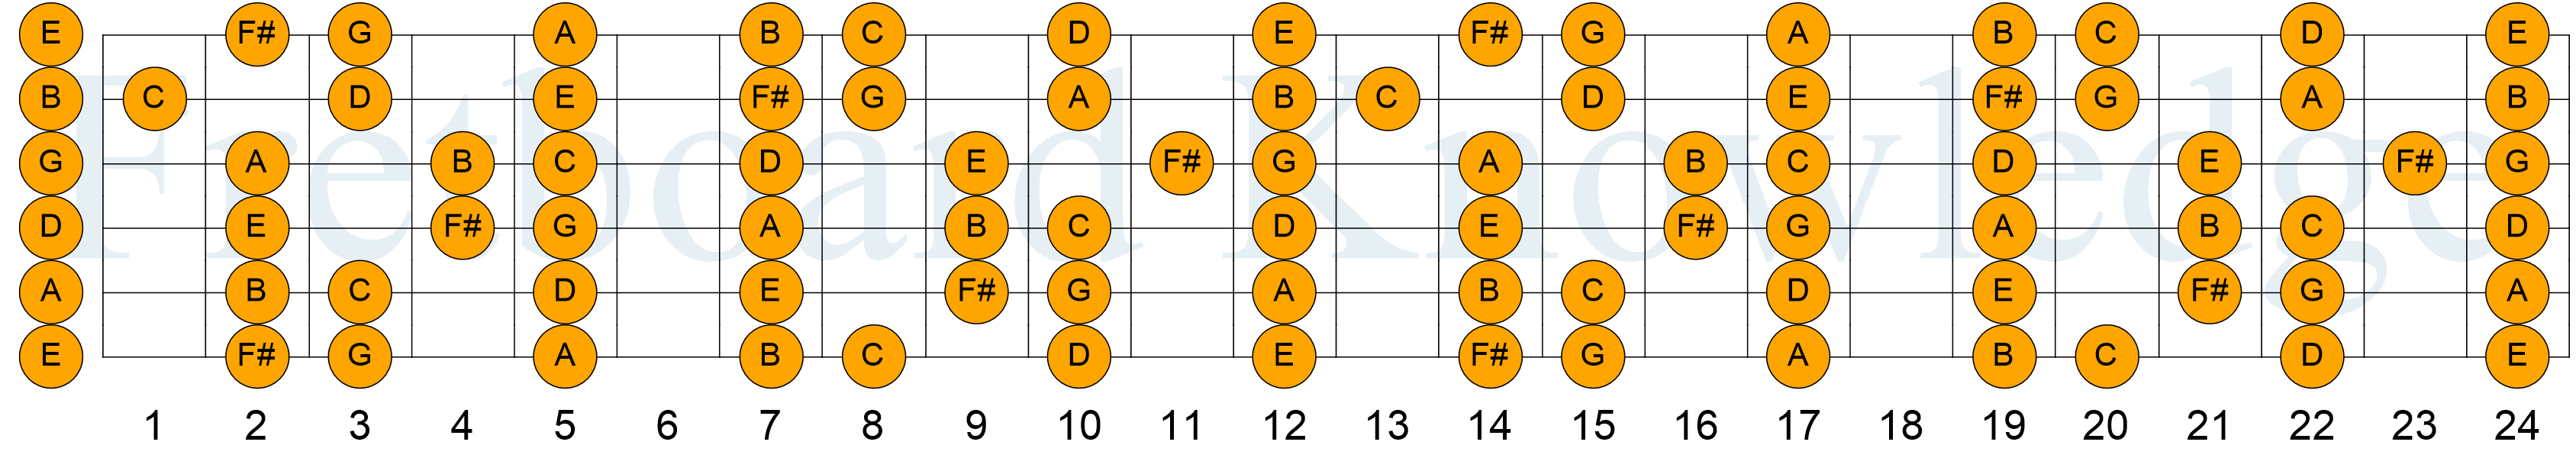 G Major Scale Guitar Fretboard Diagram - Note Names - Orange Dots